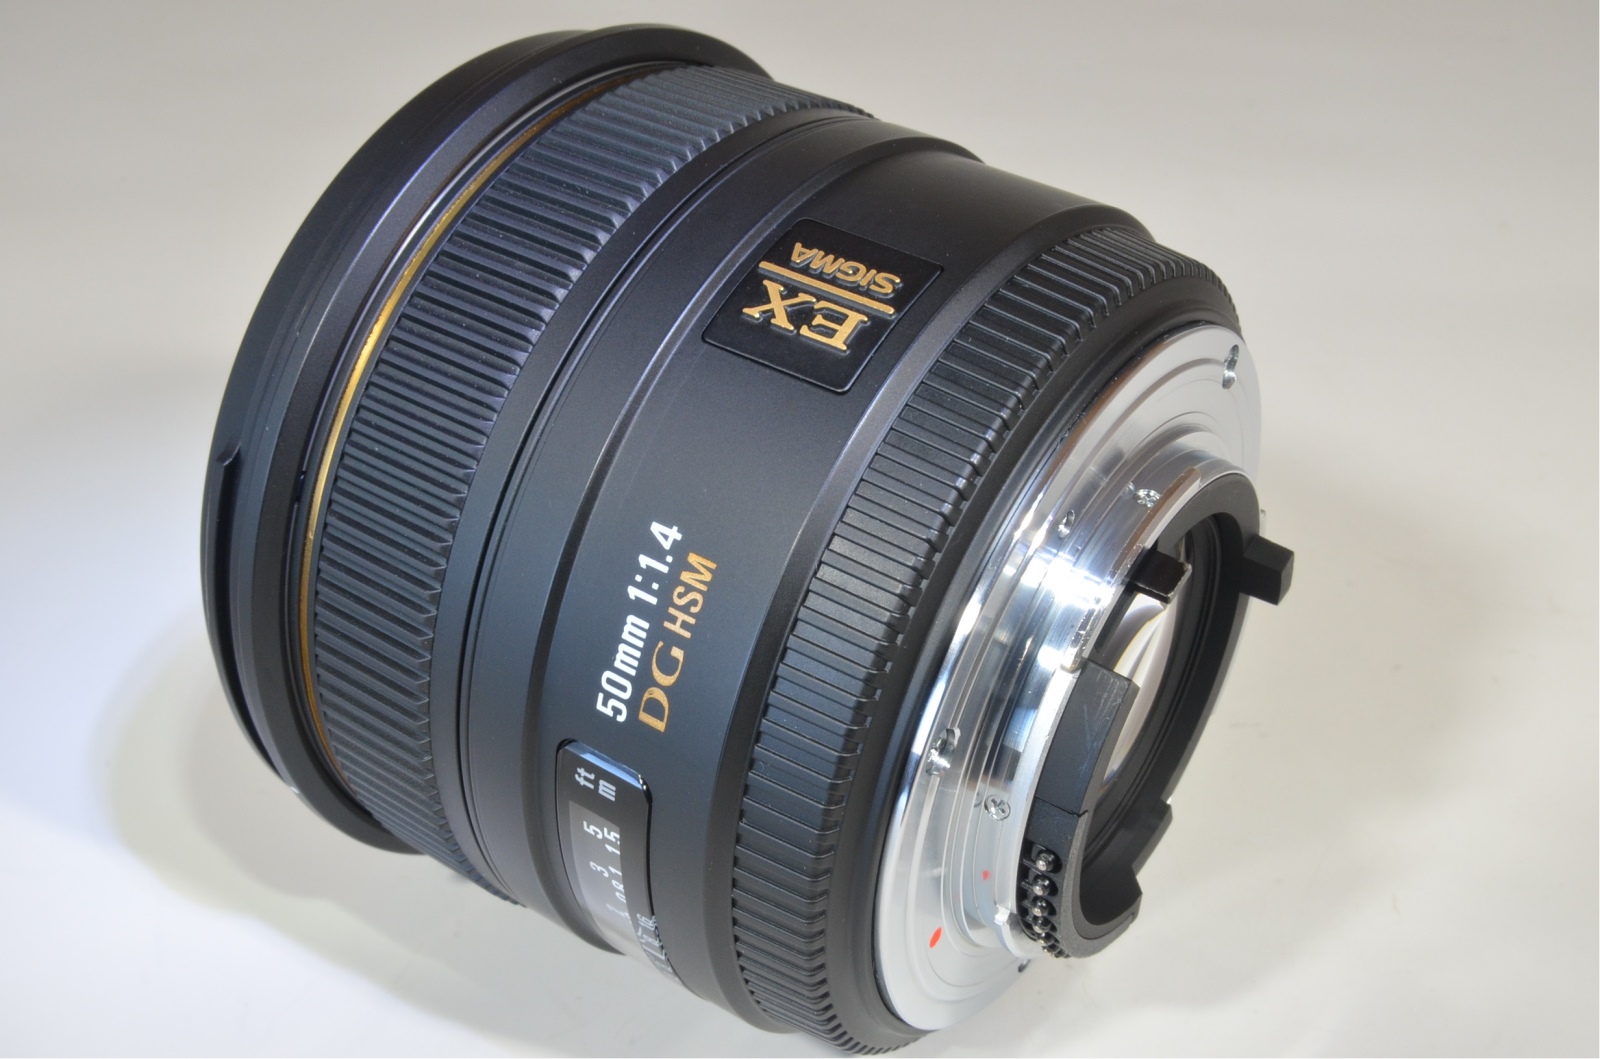 SIGMA 50mm F1.4 EX DG HSM for Canon #a0154 | SuperB JAPAN CAMERA